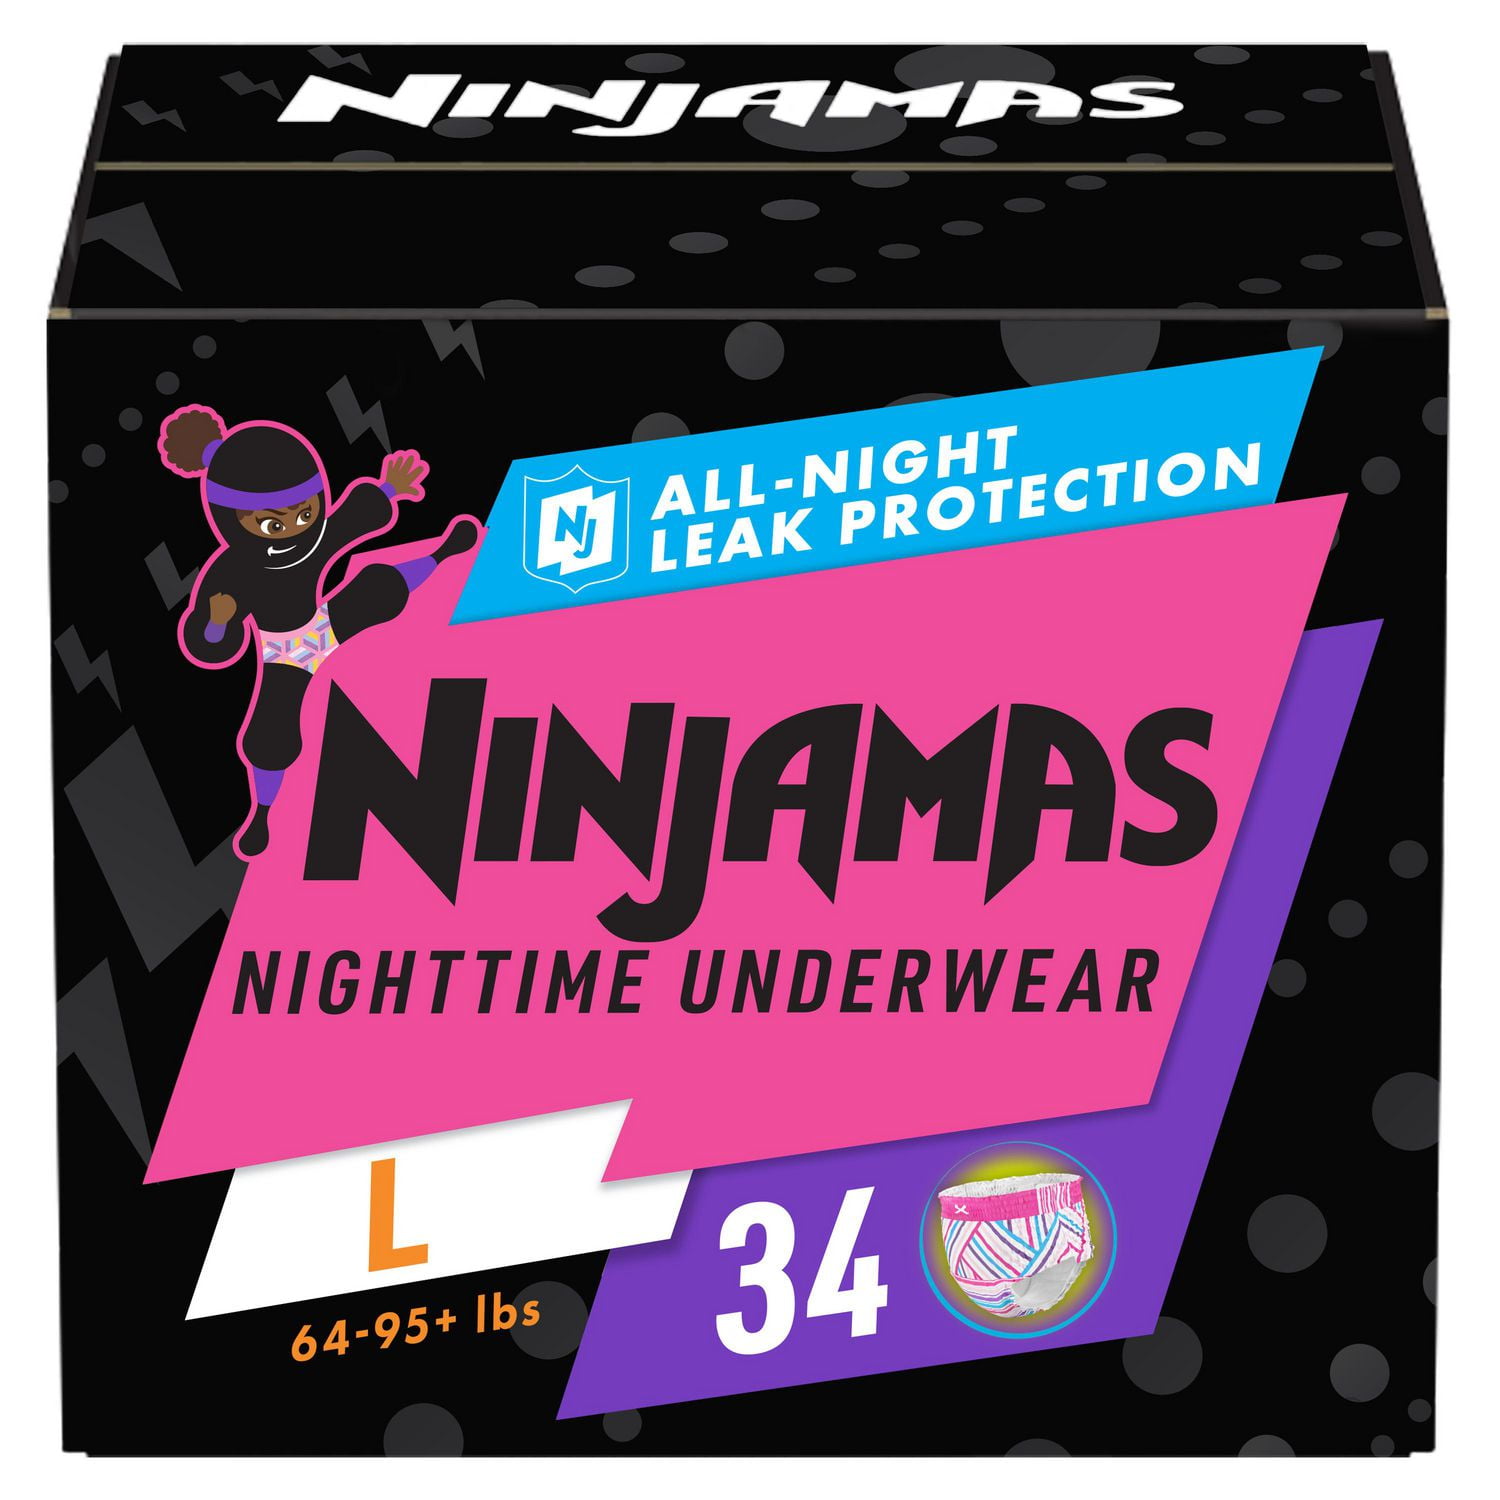 Pampers Ninjamas Nighttime Bedwetting Underwear Boy India